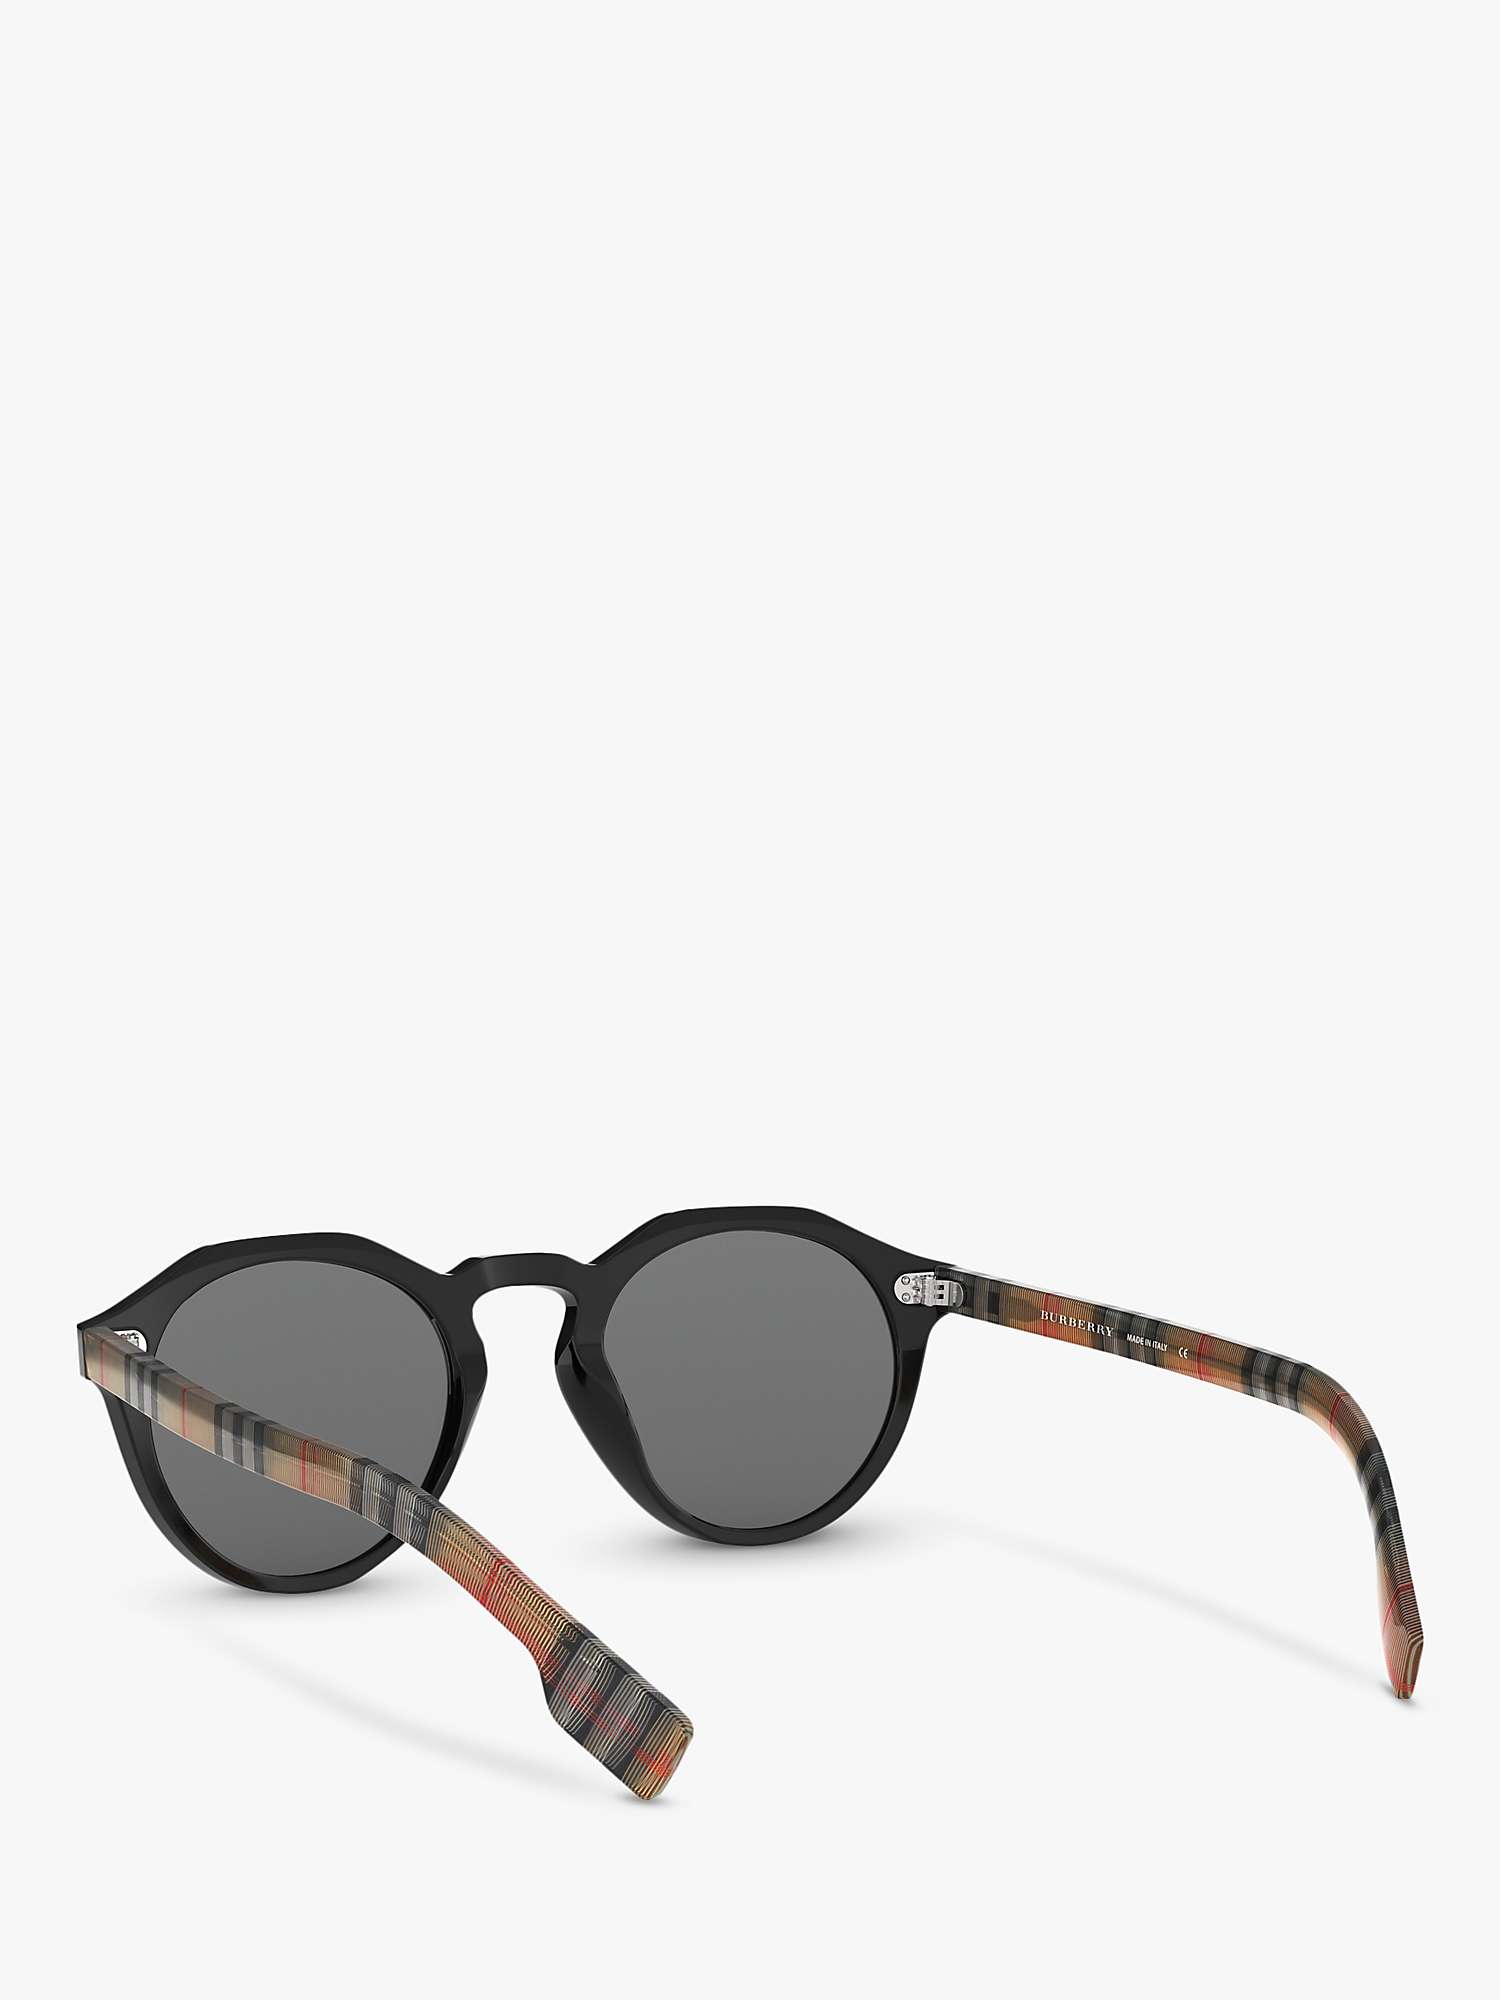 Burberry BE4280 Men's Round Sunglasses, Black/Grey at John Lewis & Partners